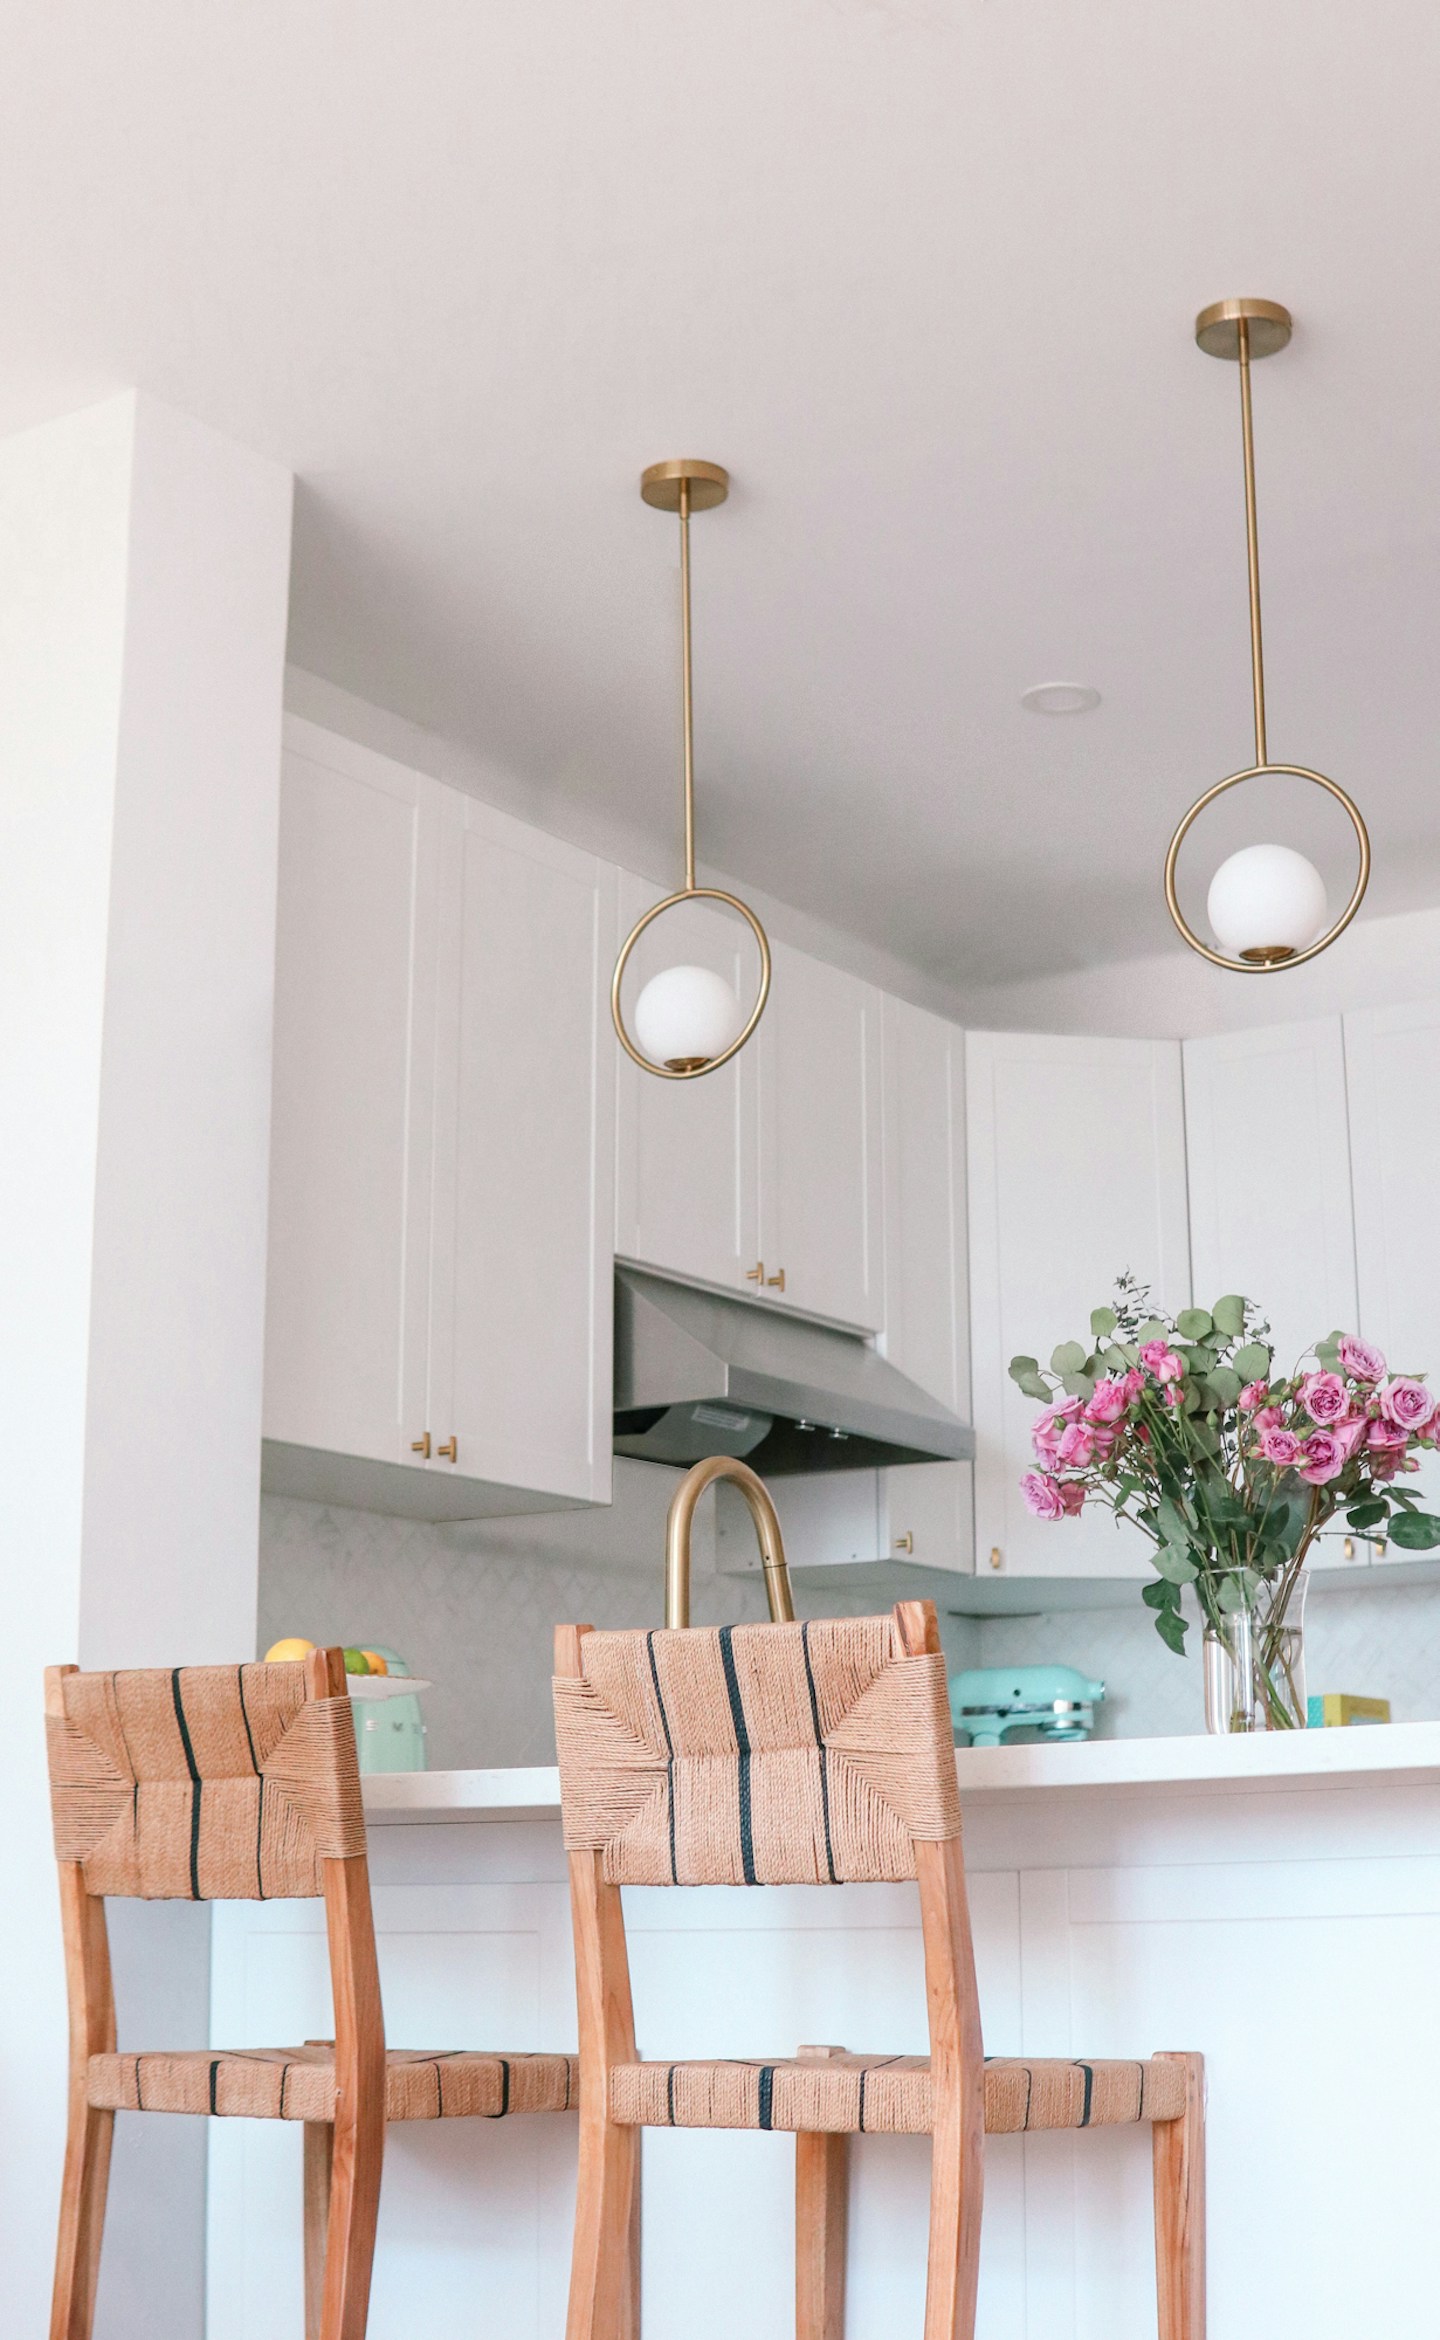 Modern all-white condo kitchen reno ideas on a budget